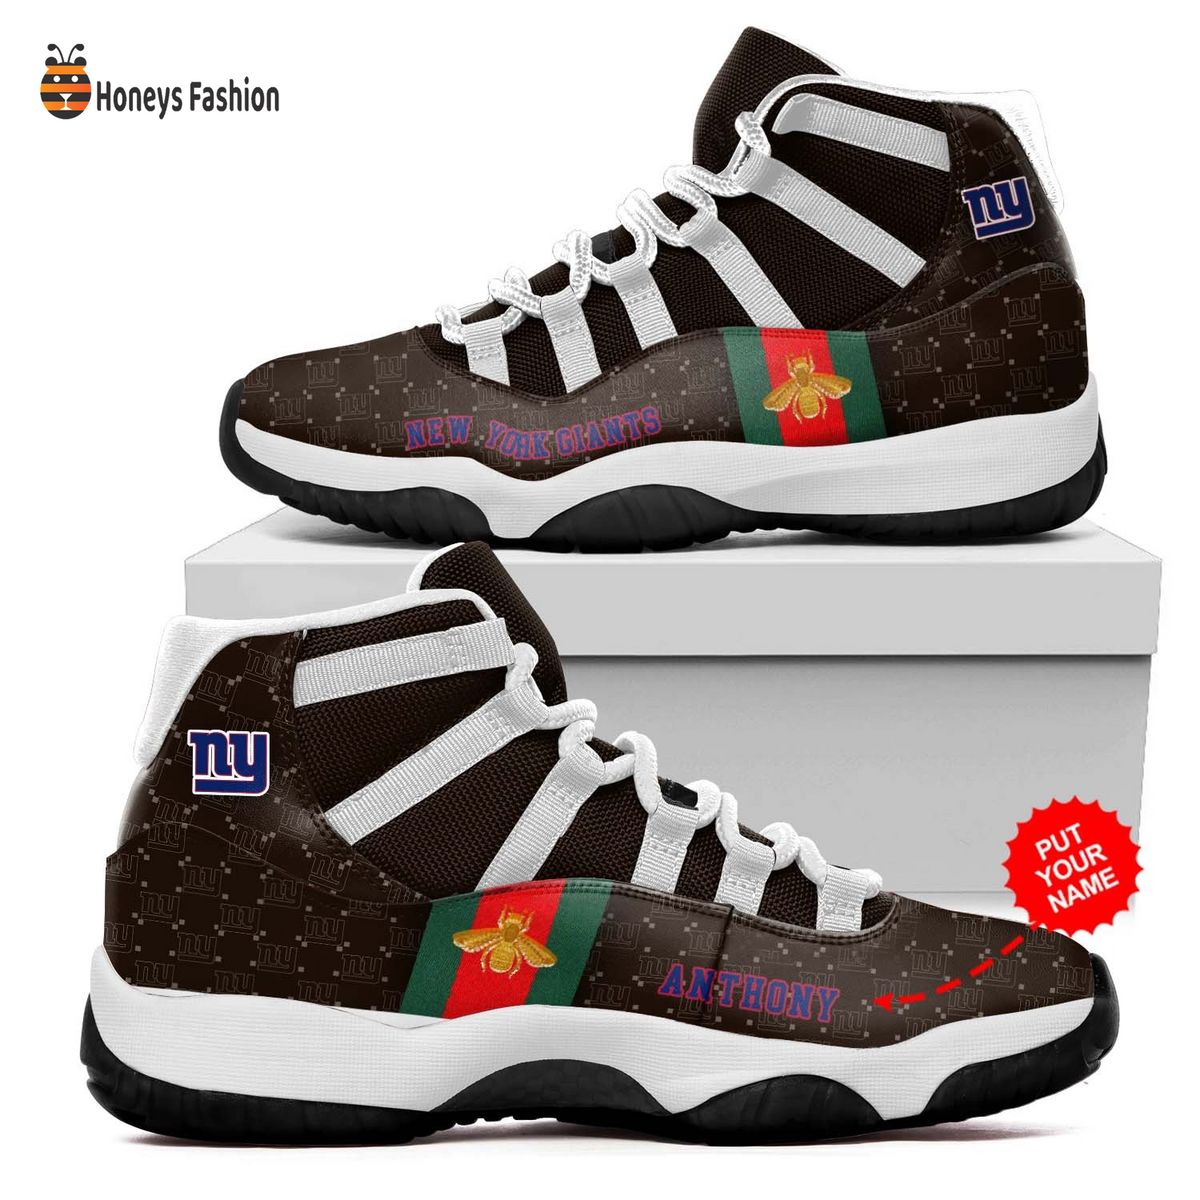 New York Giants NFL Gucci Air Jordan 11 Shoes